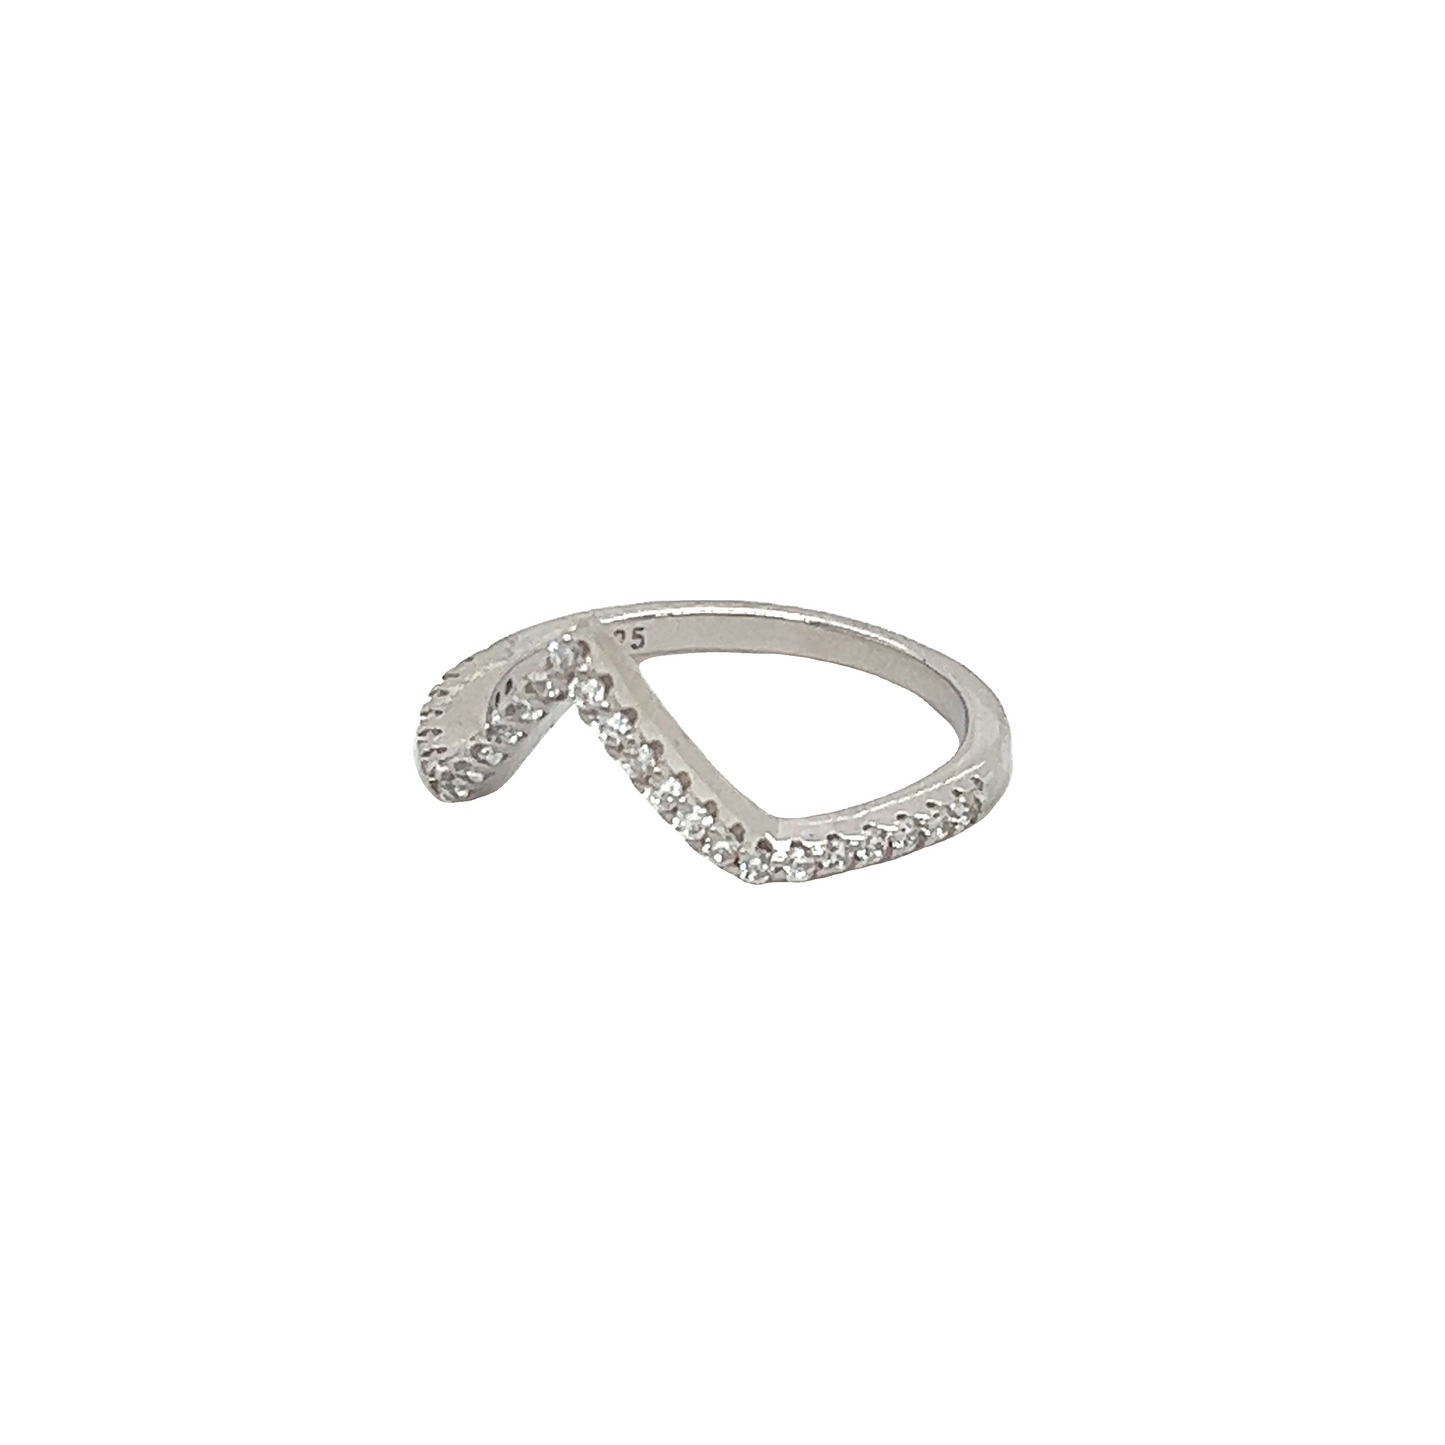 An elegant Pave Set Cubic Zirconia Chevron Ring with diamonds on it.